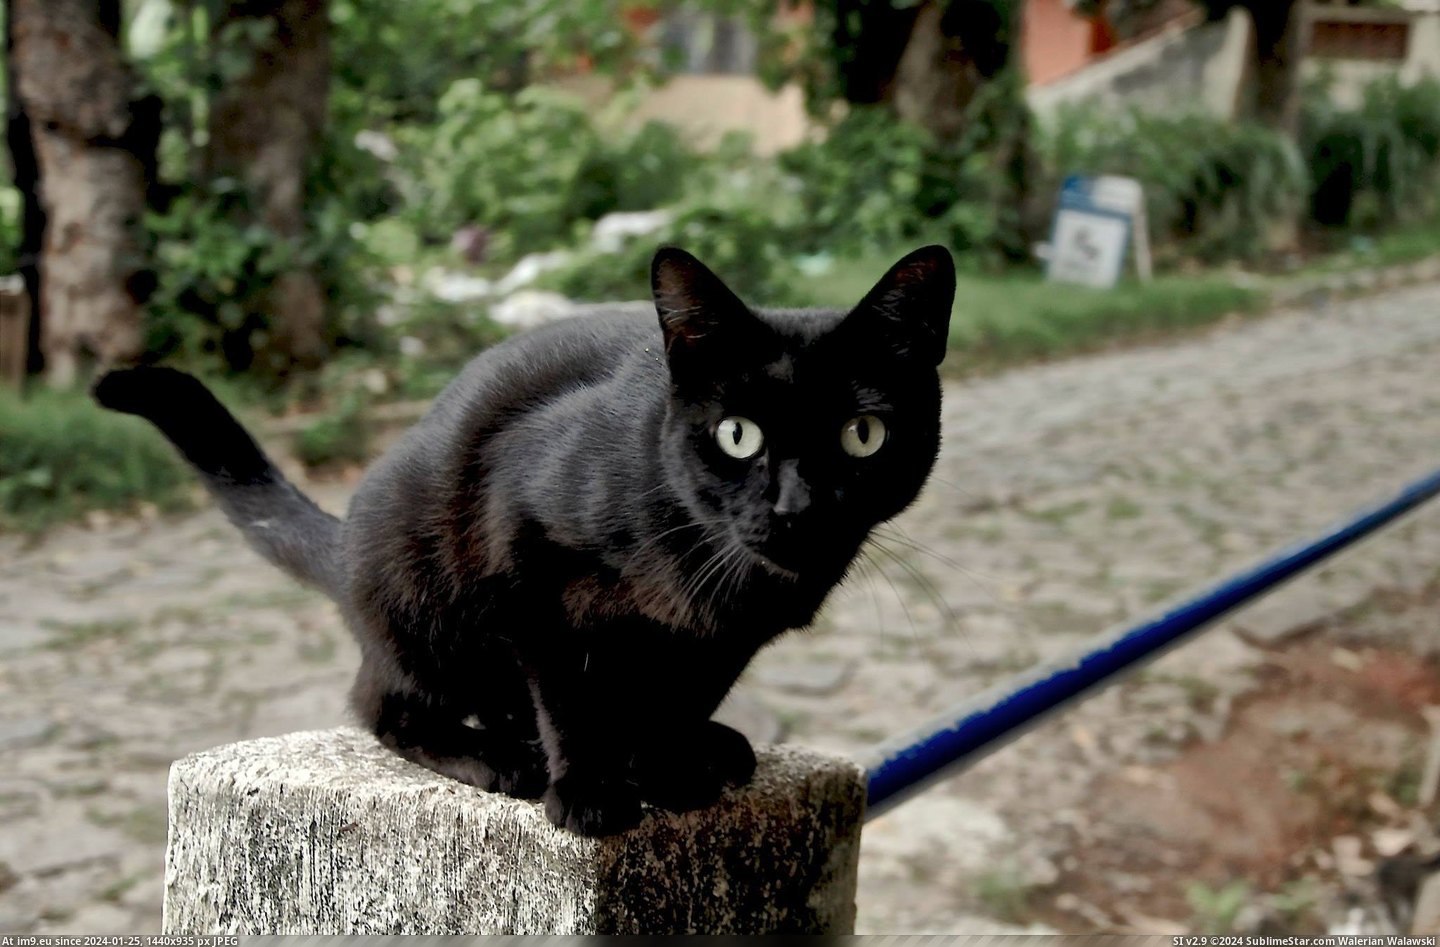 #Cats #Cat #Curious #Street #Brazilian [Cats] Just a Curious Brazilian Street Cat Pic. (Image of album My r/CATS favs))